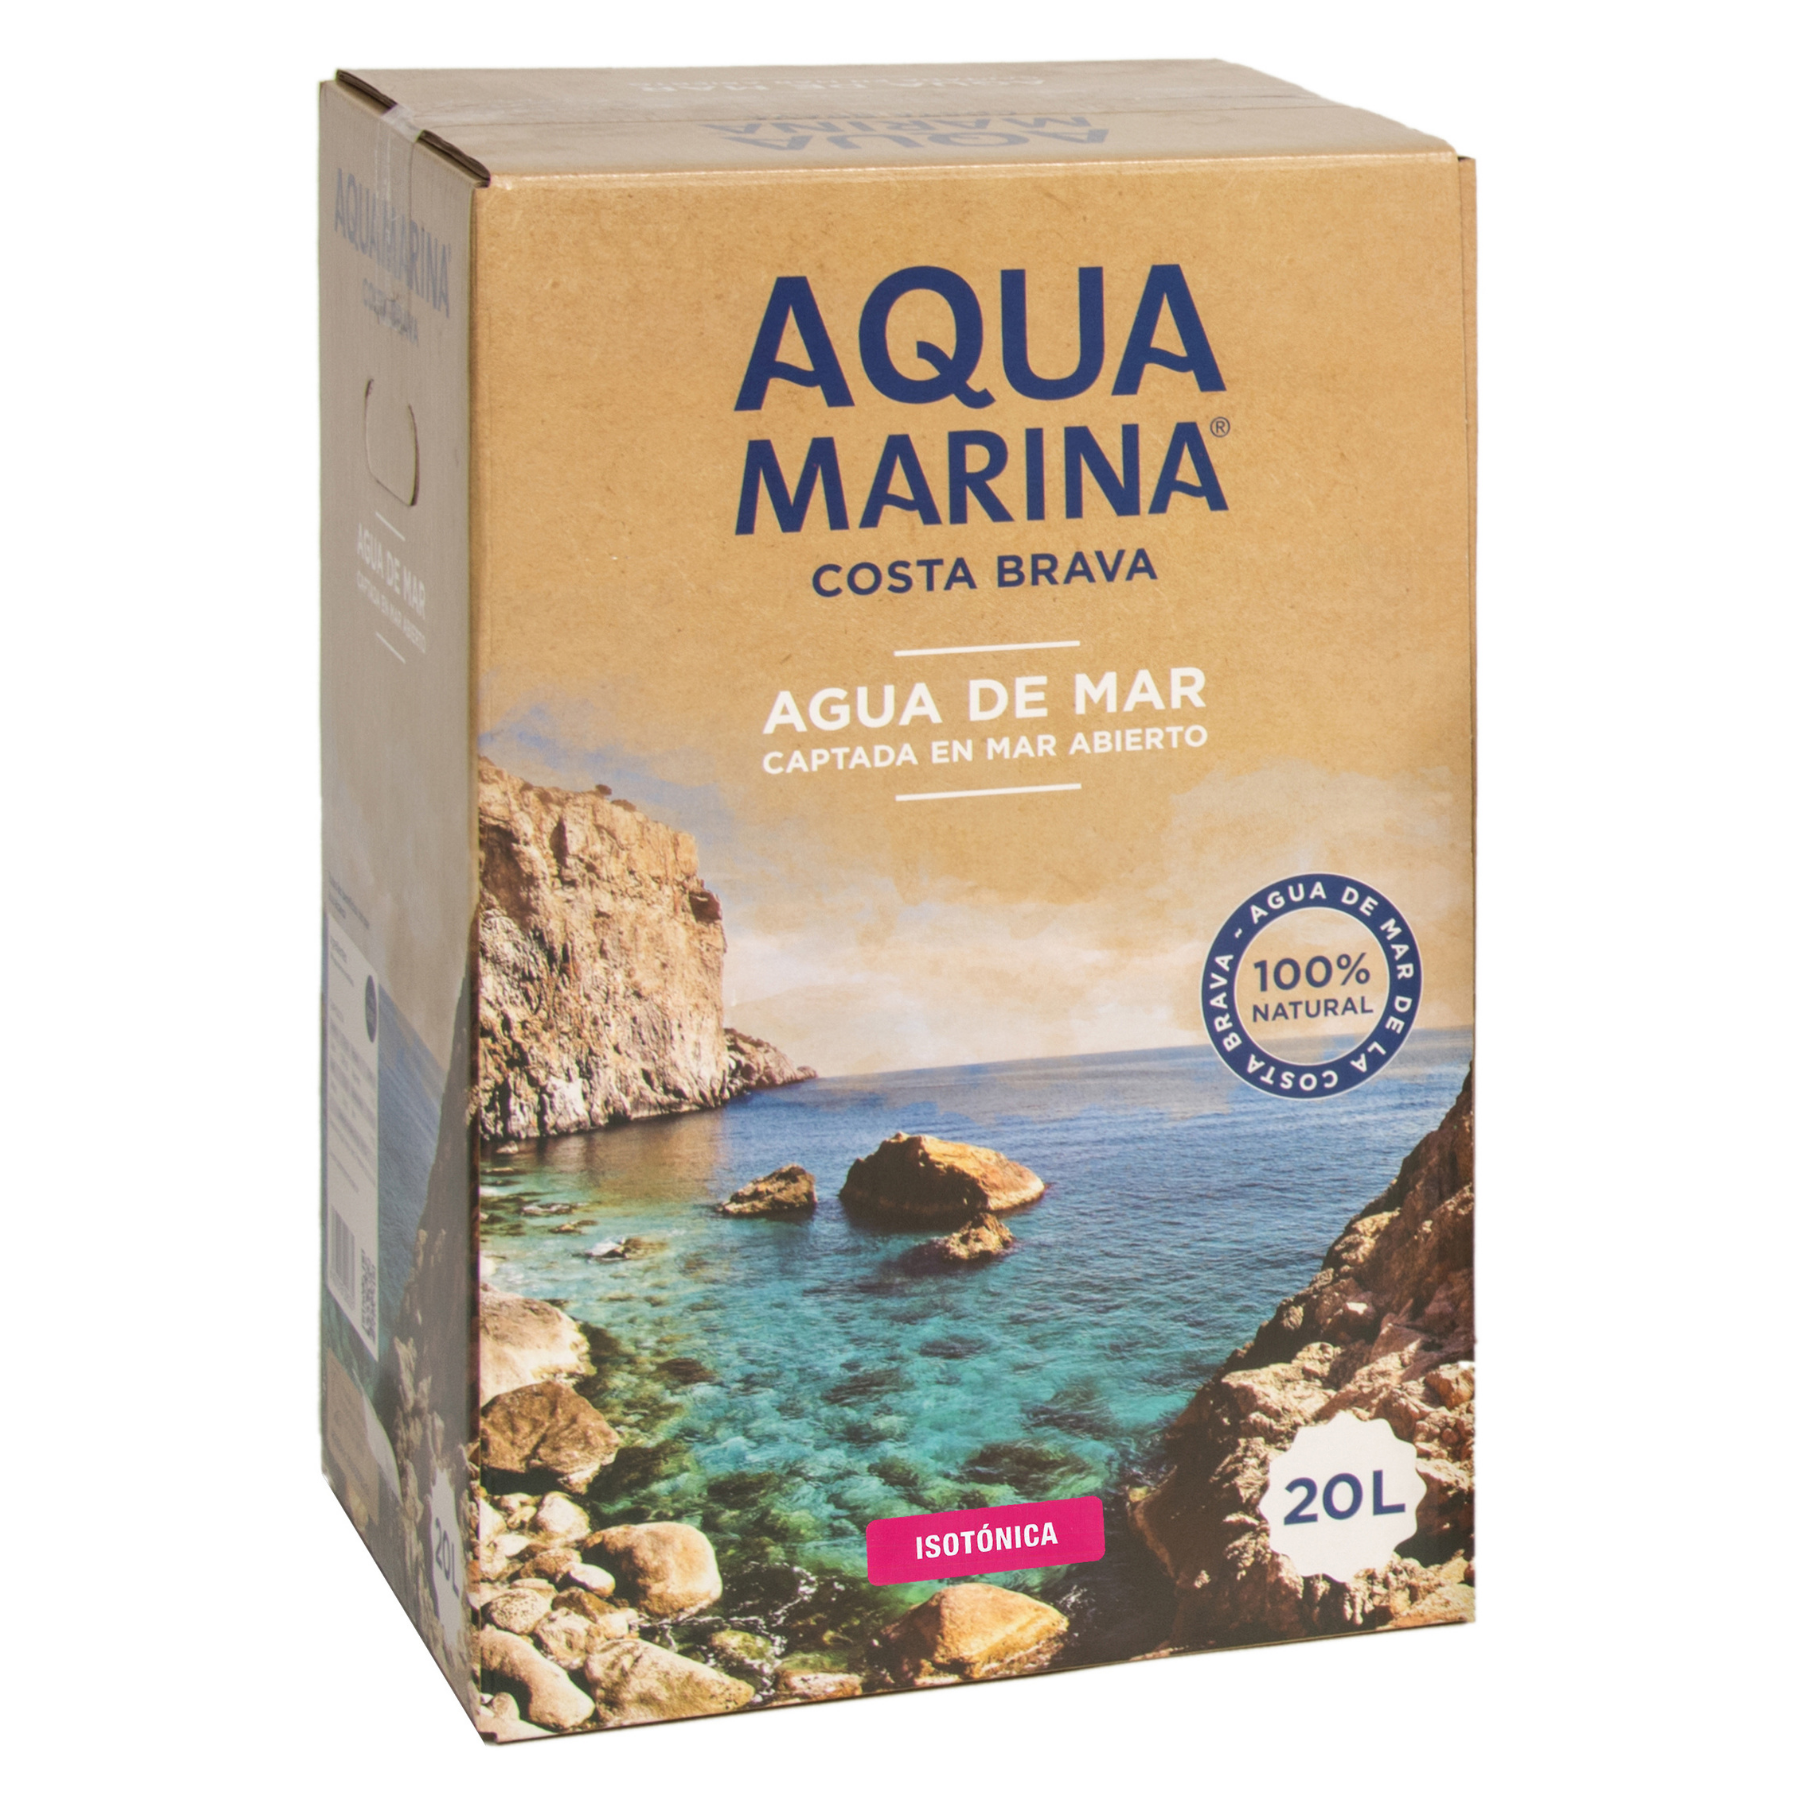 AQUAMARINA Costa Brava. Agua marina Isotónica 20 Litros Bag In Box. Microfiltrada, sin aditivos. Aporta 75 minerales y oligoelementos.